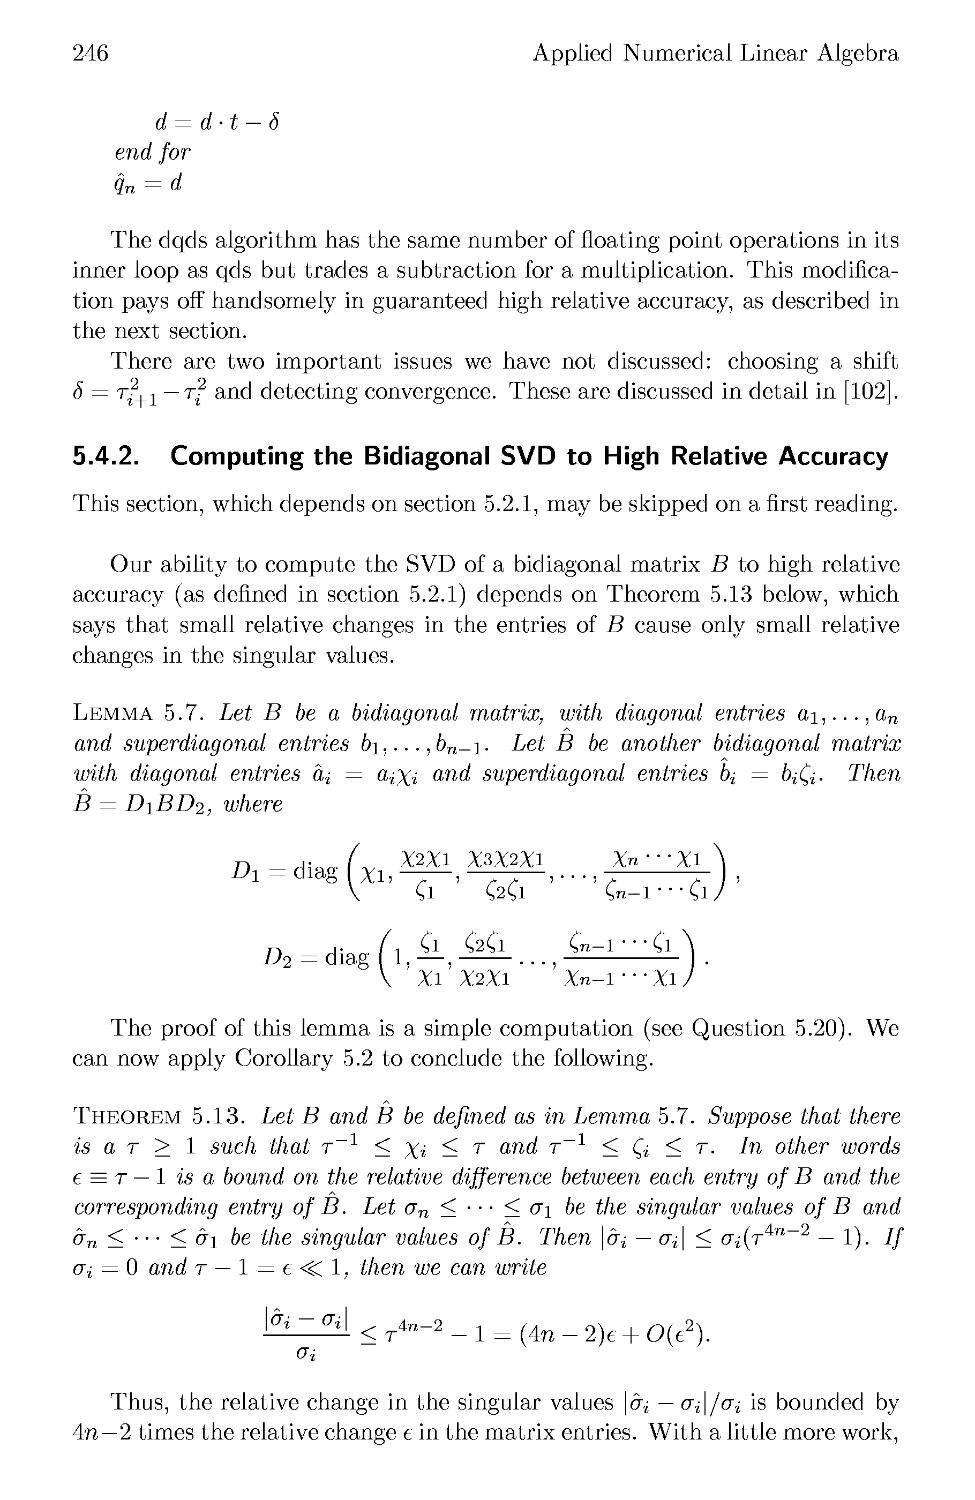 5.4.2 Computing the Bidiagonal SVD to High Relative Accuracy